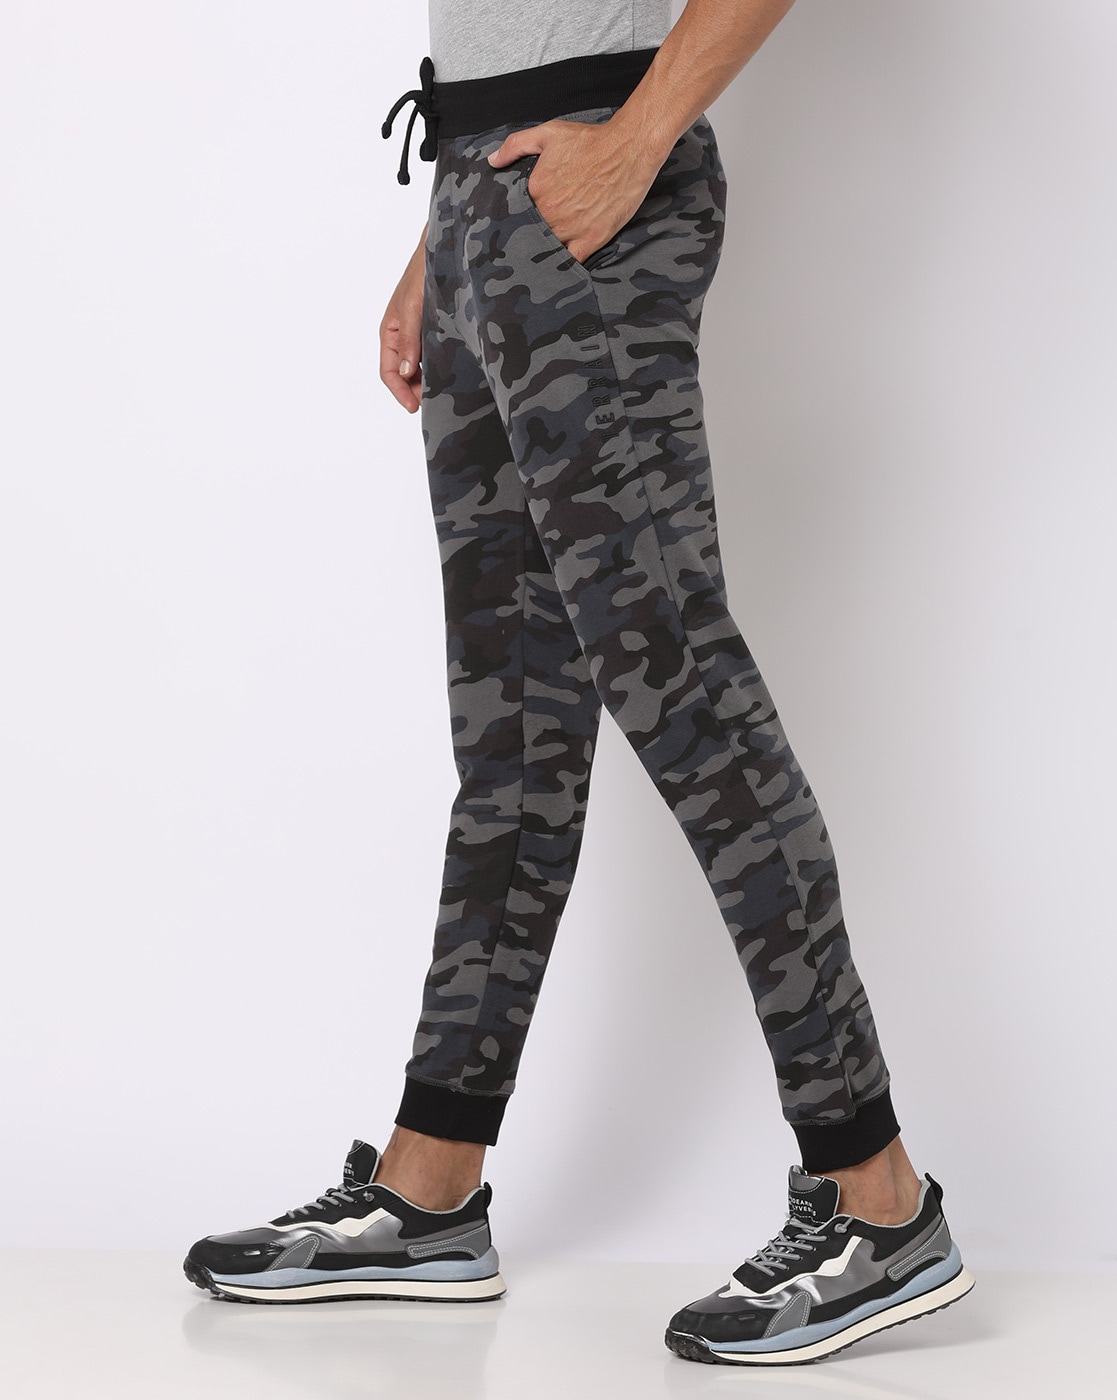 Buy VANTAR Camouflage Men Multicolor Track Pants Online  Get 80 Off